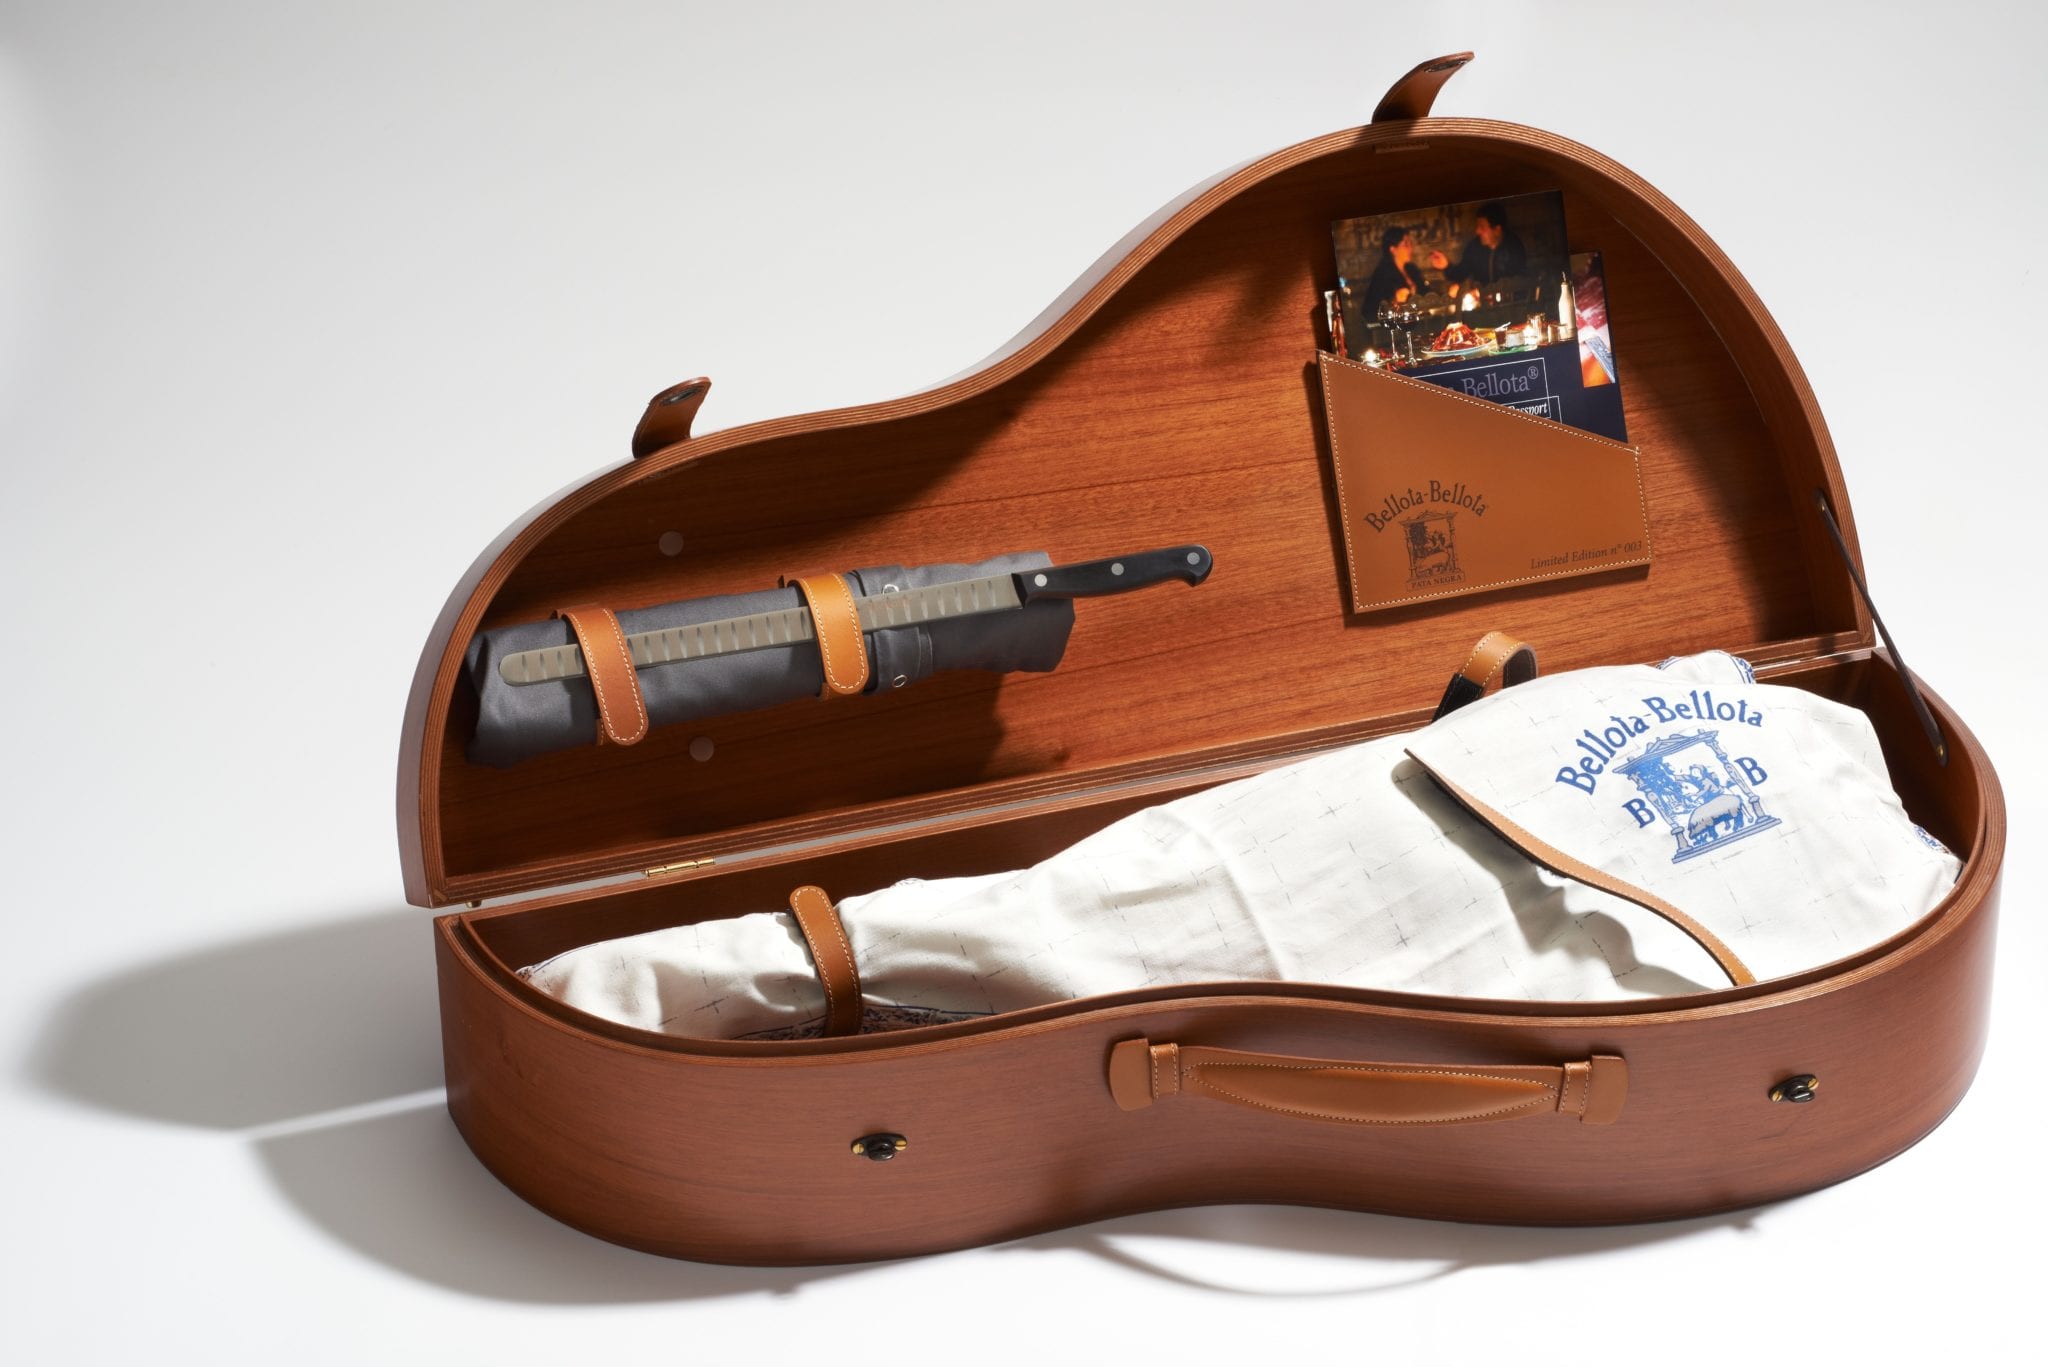 Coffret de Luxe en Acajou Moulé pour Jambon (Bellota-Bellota- Stradivarius)